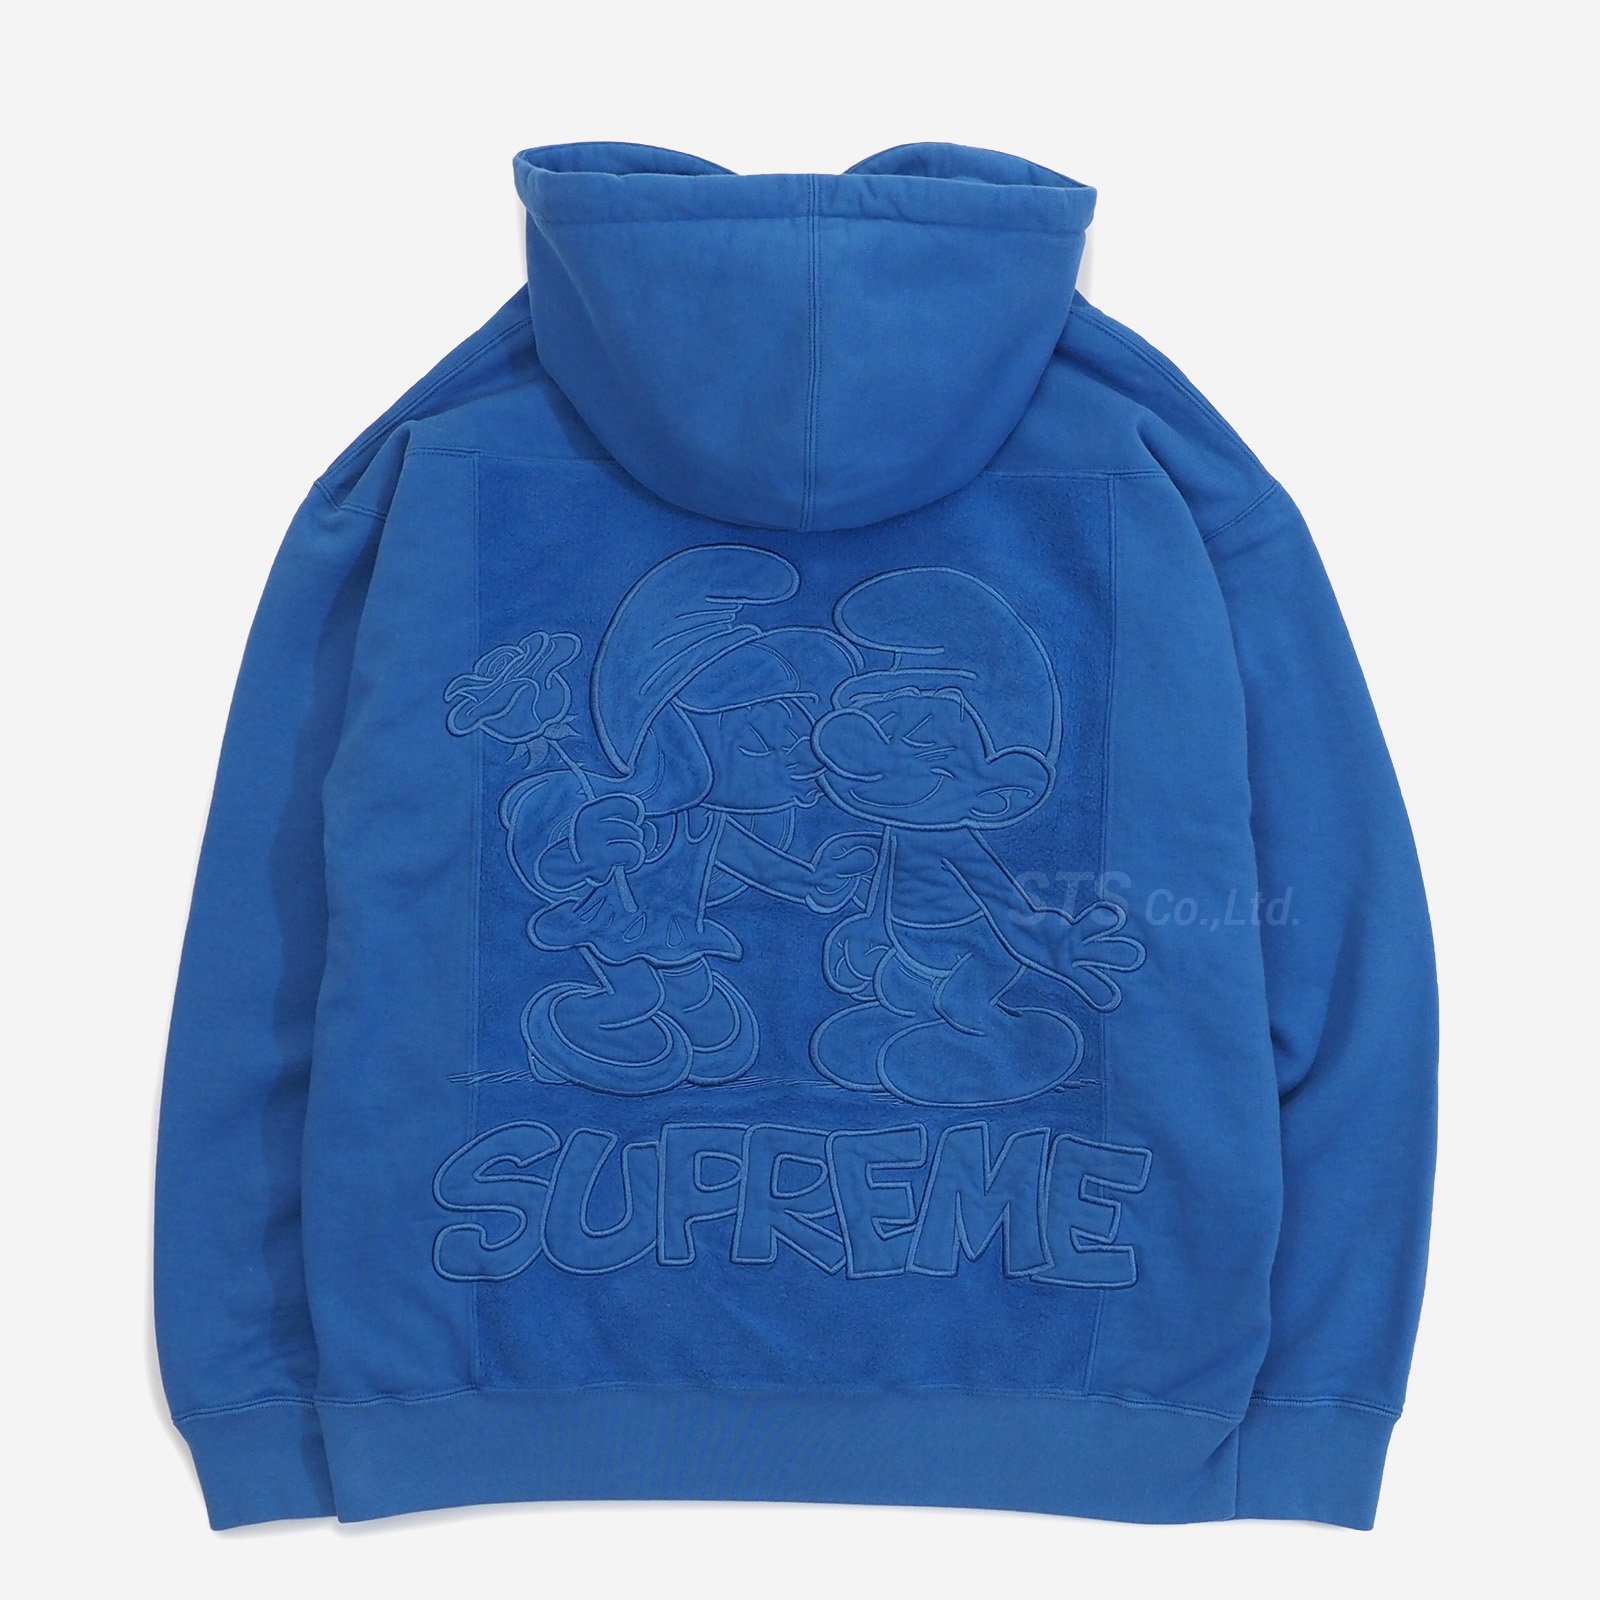 -Smusupreme/smurfs hooded sweatshirt